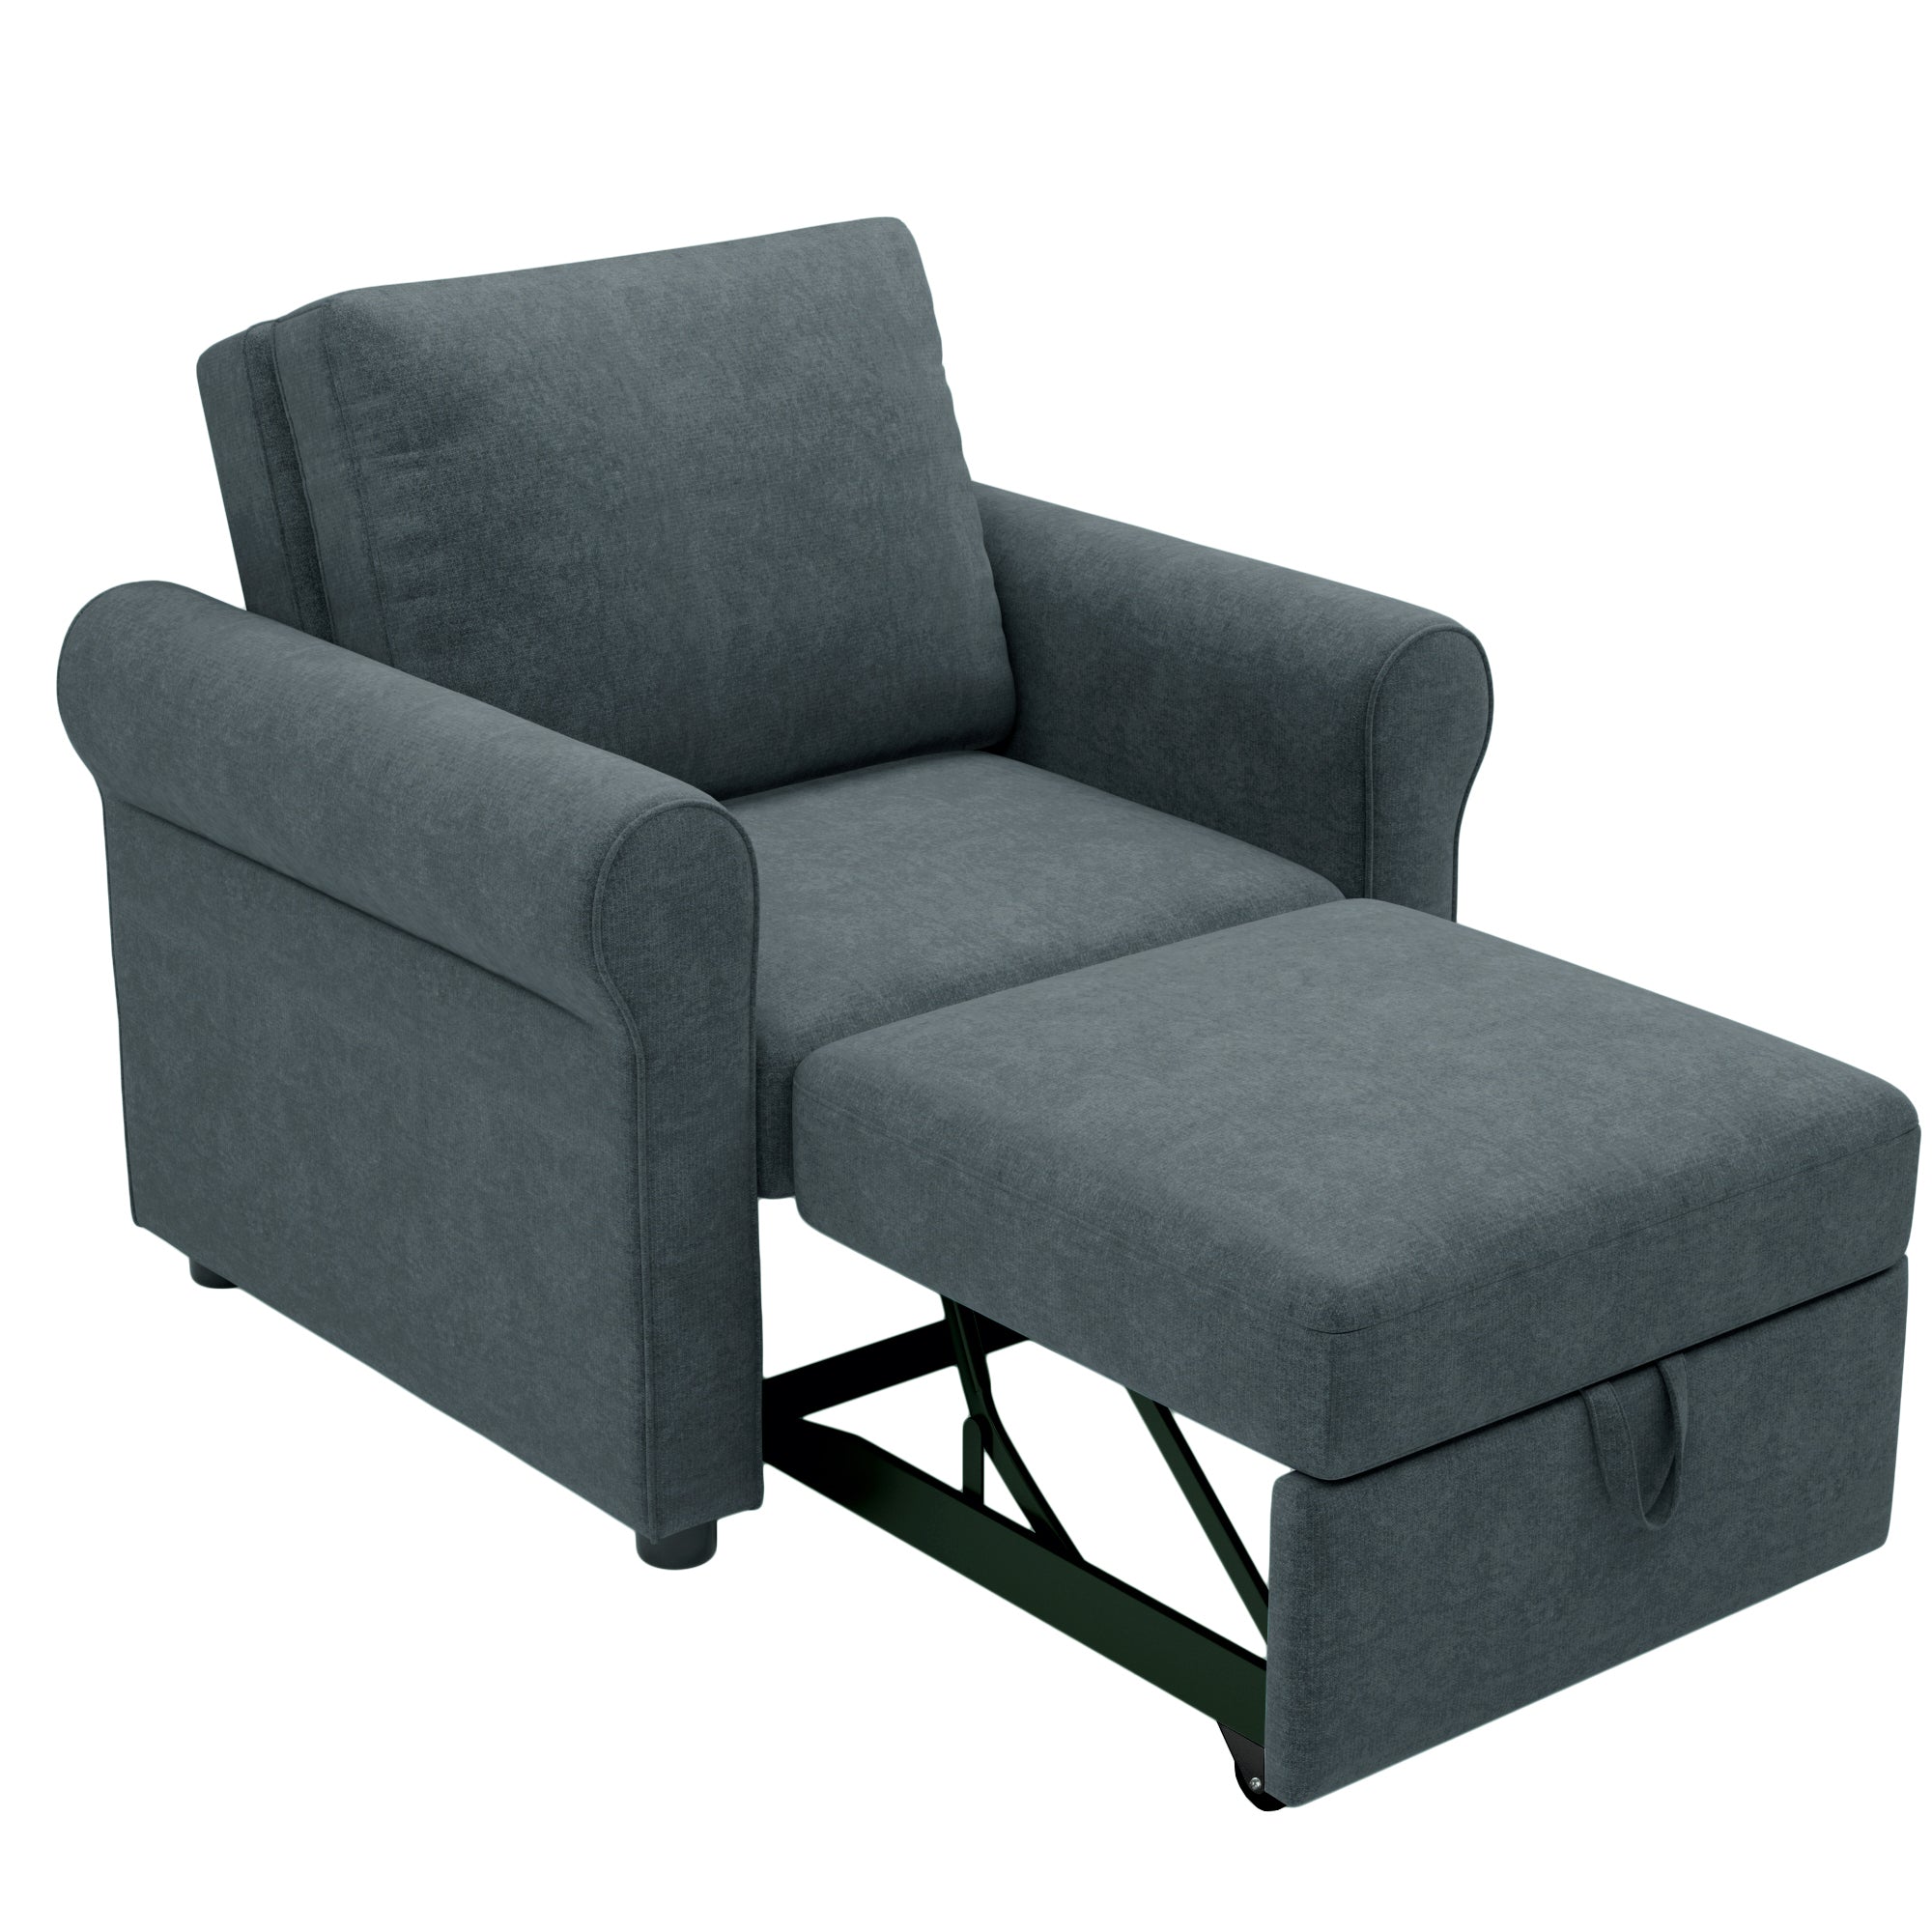 3 in 1 Sofa Bed Chair, Convertible Sleeper Chair dark blue-linen